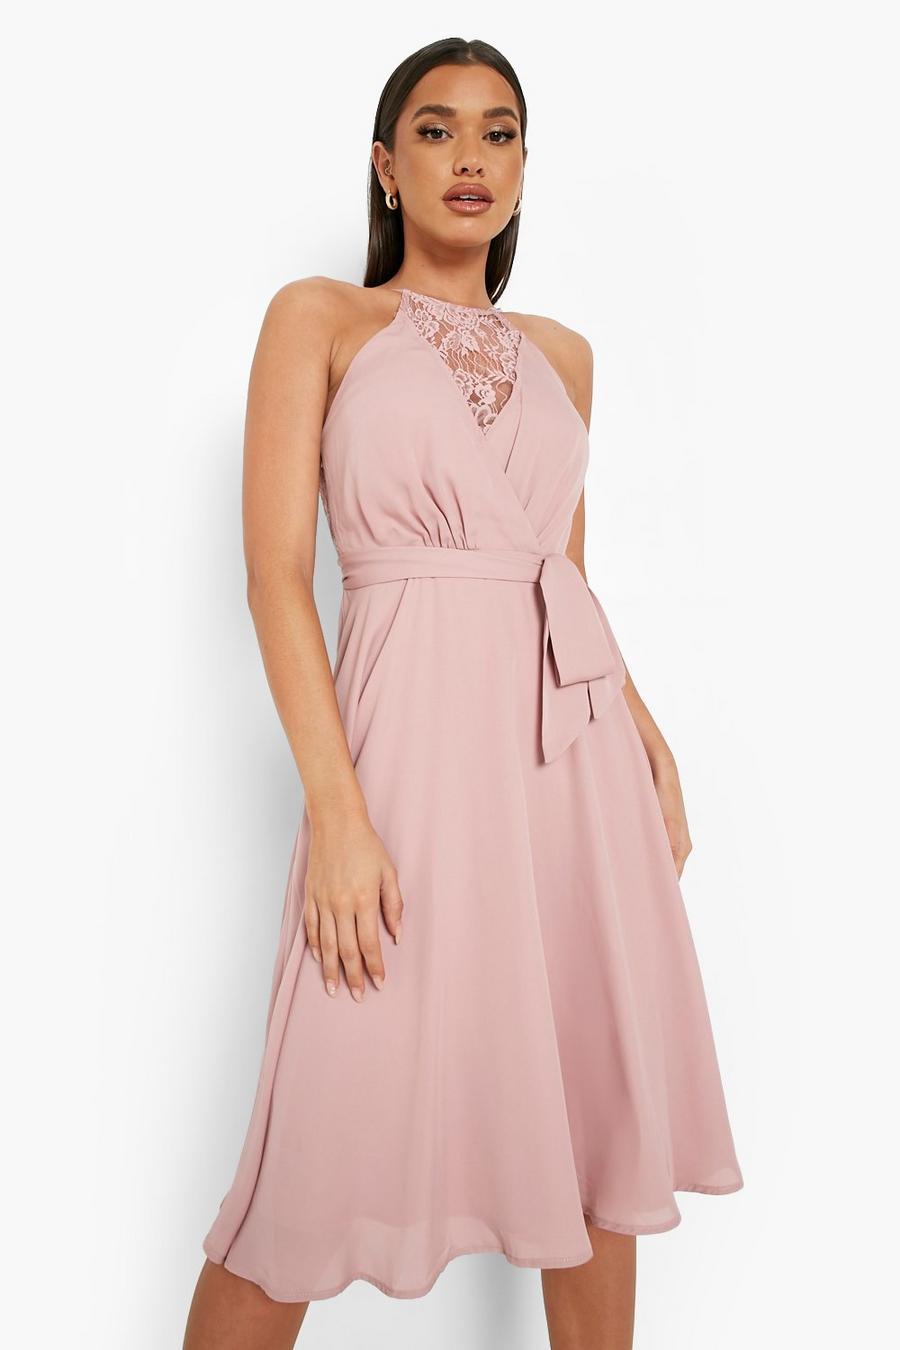 Womens Dresses McQ Dresses - Save 40% McQ Dress Woman in Peach Pink 